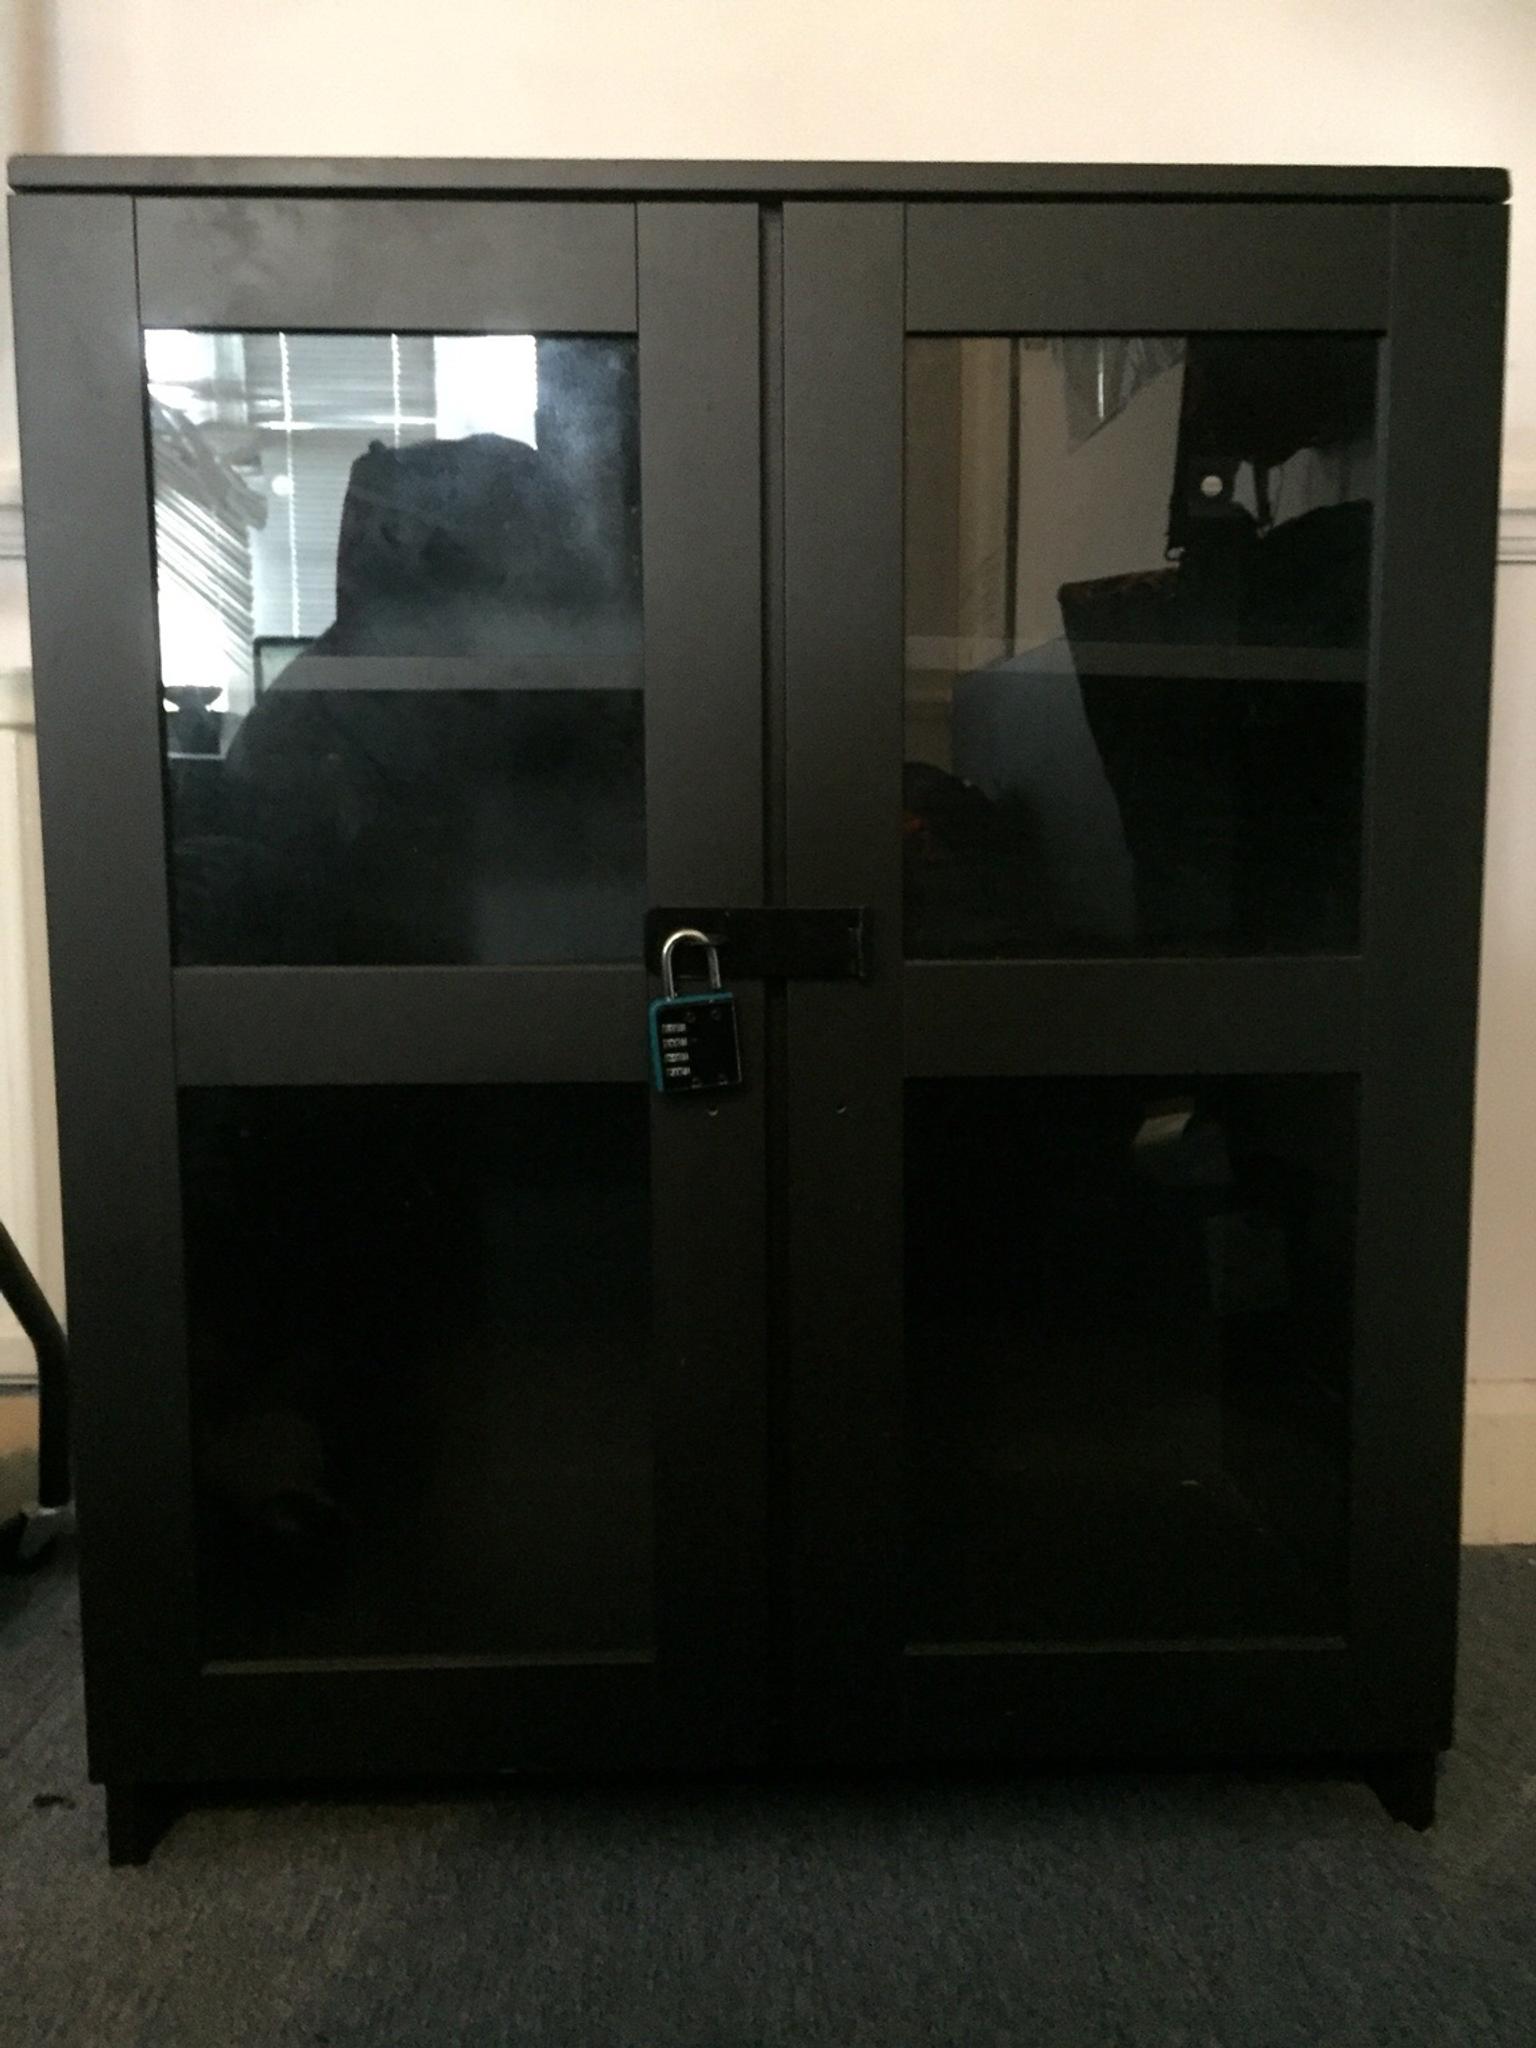 Lockable Ikea Brimnes Glass Cabinet In Se4 Lewisham Fur 30 00